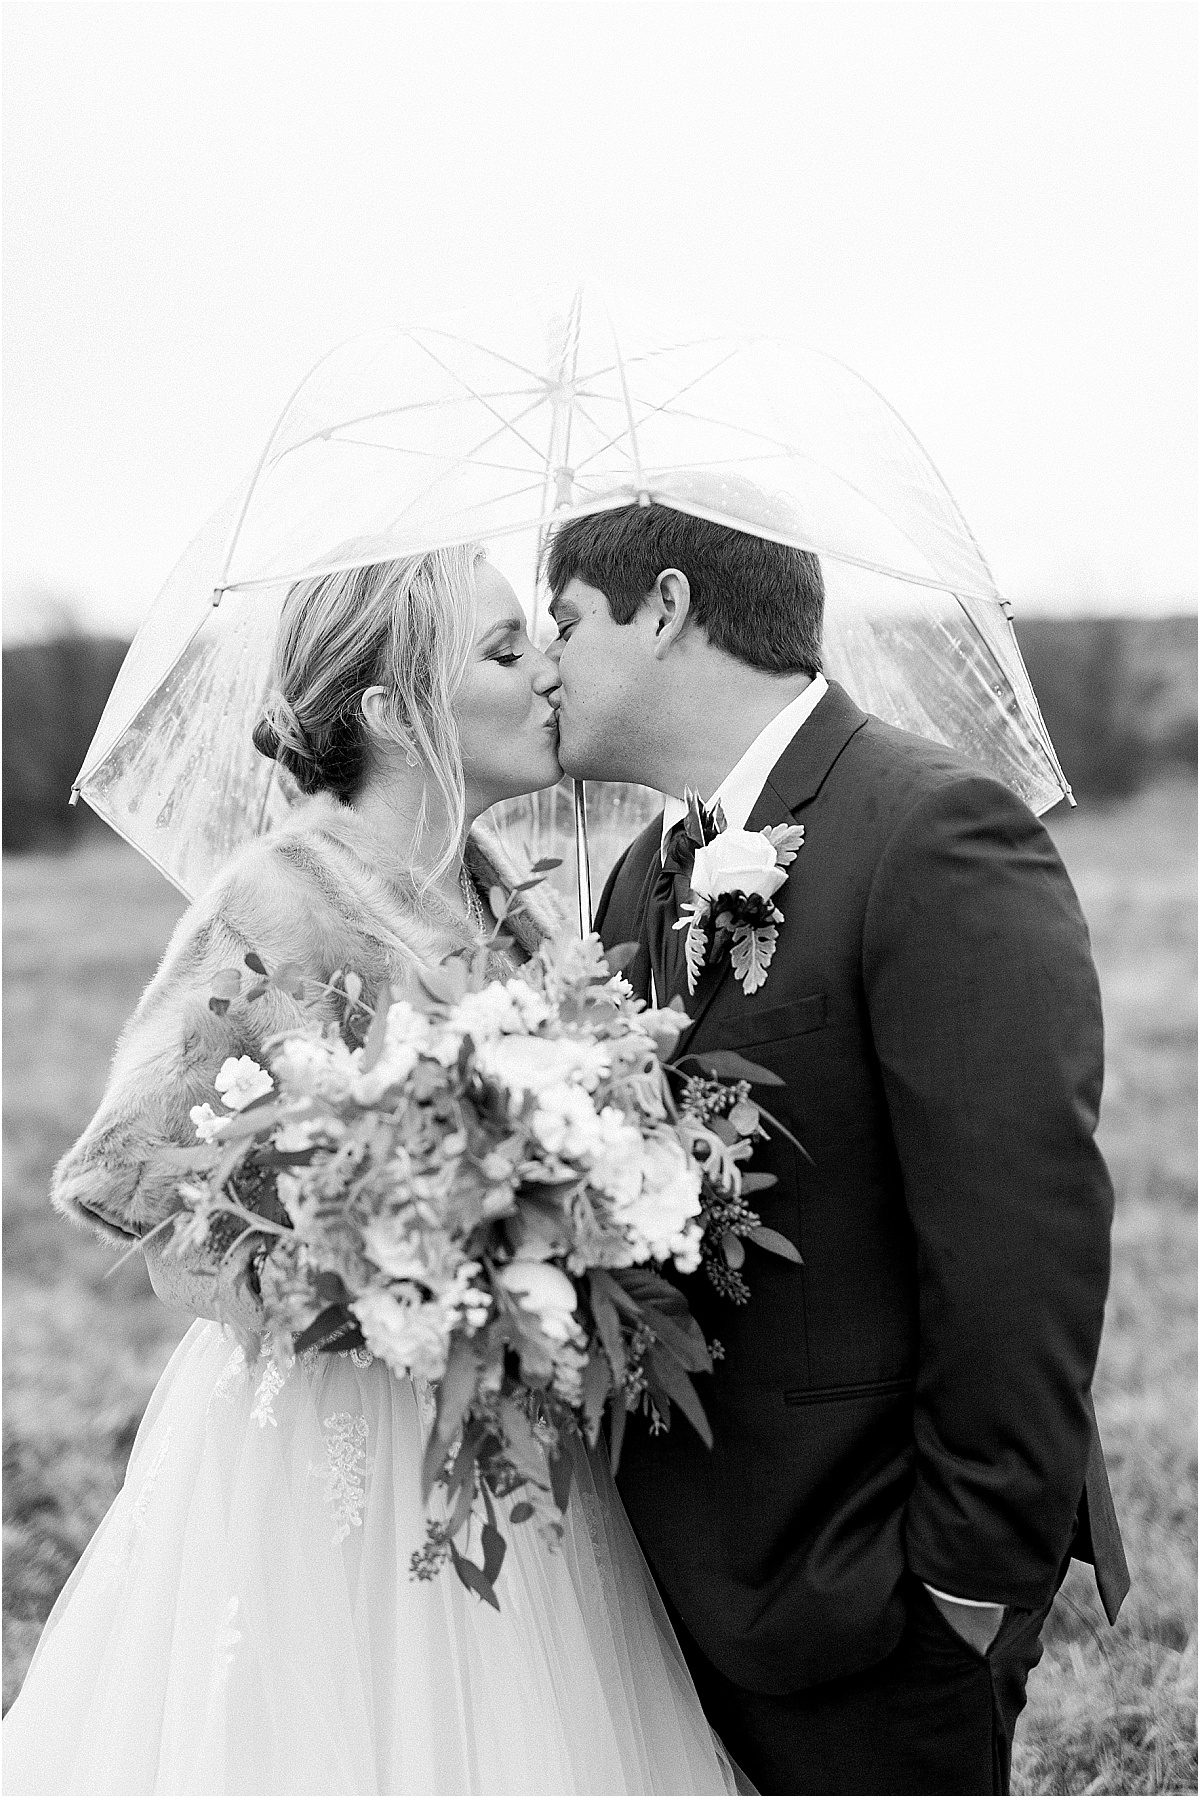 rainy wedding day